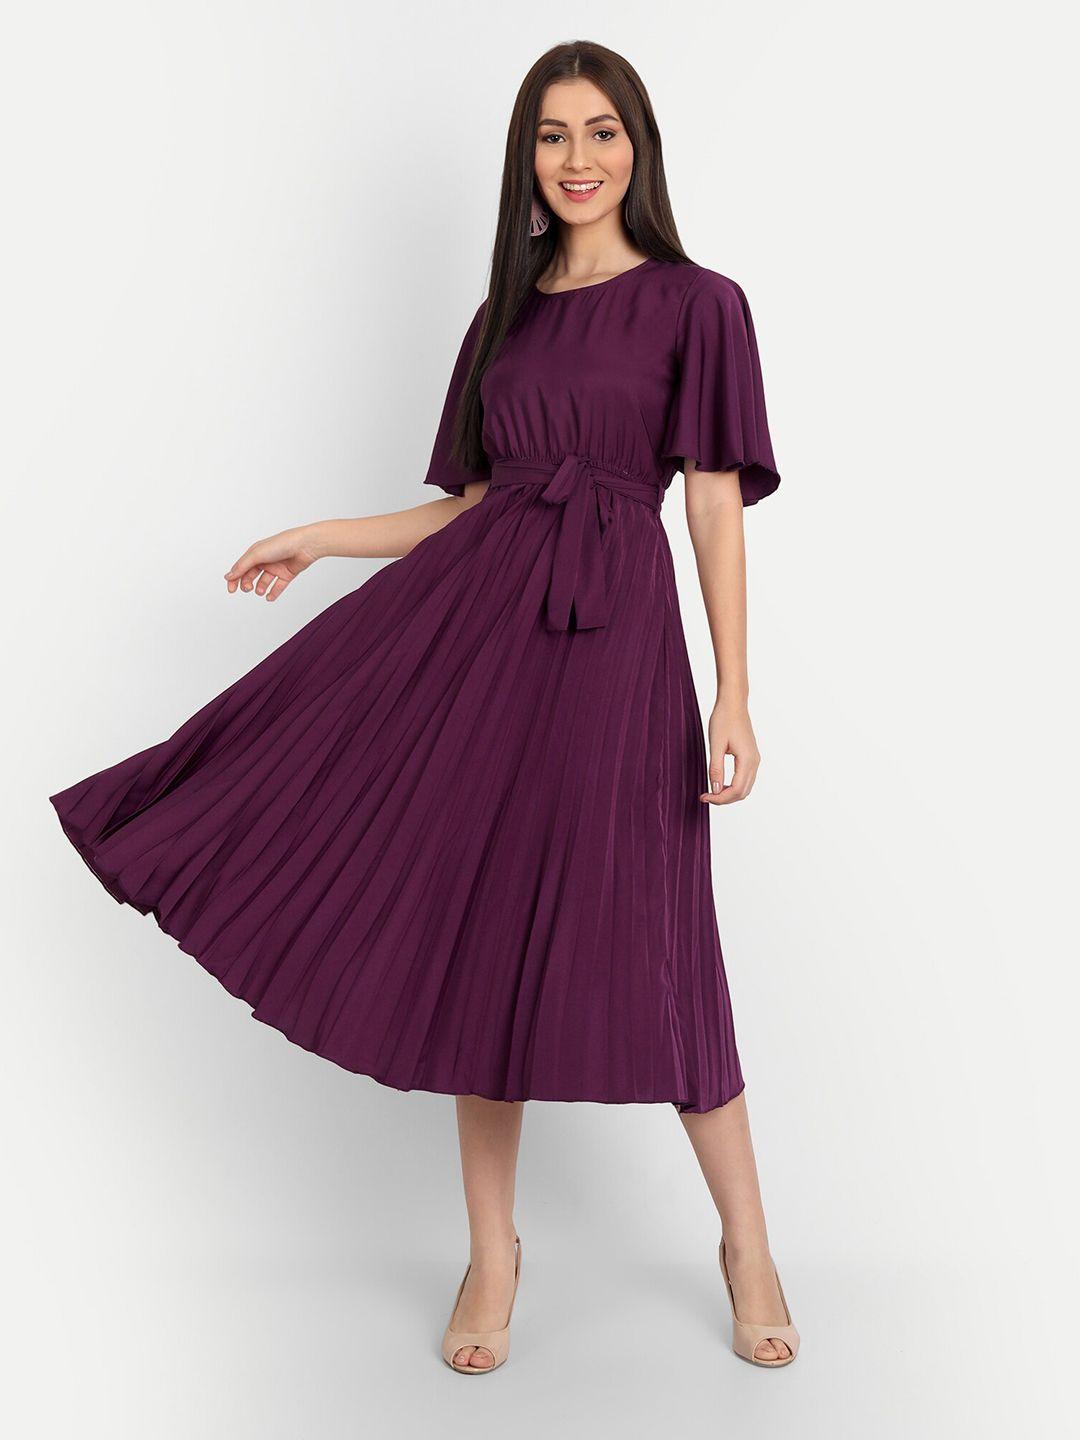 deklook purple crepe fit & flare midi dress